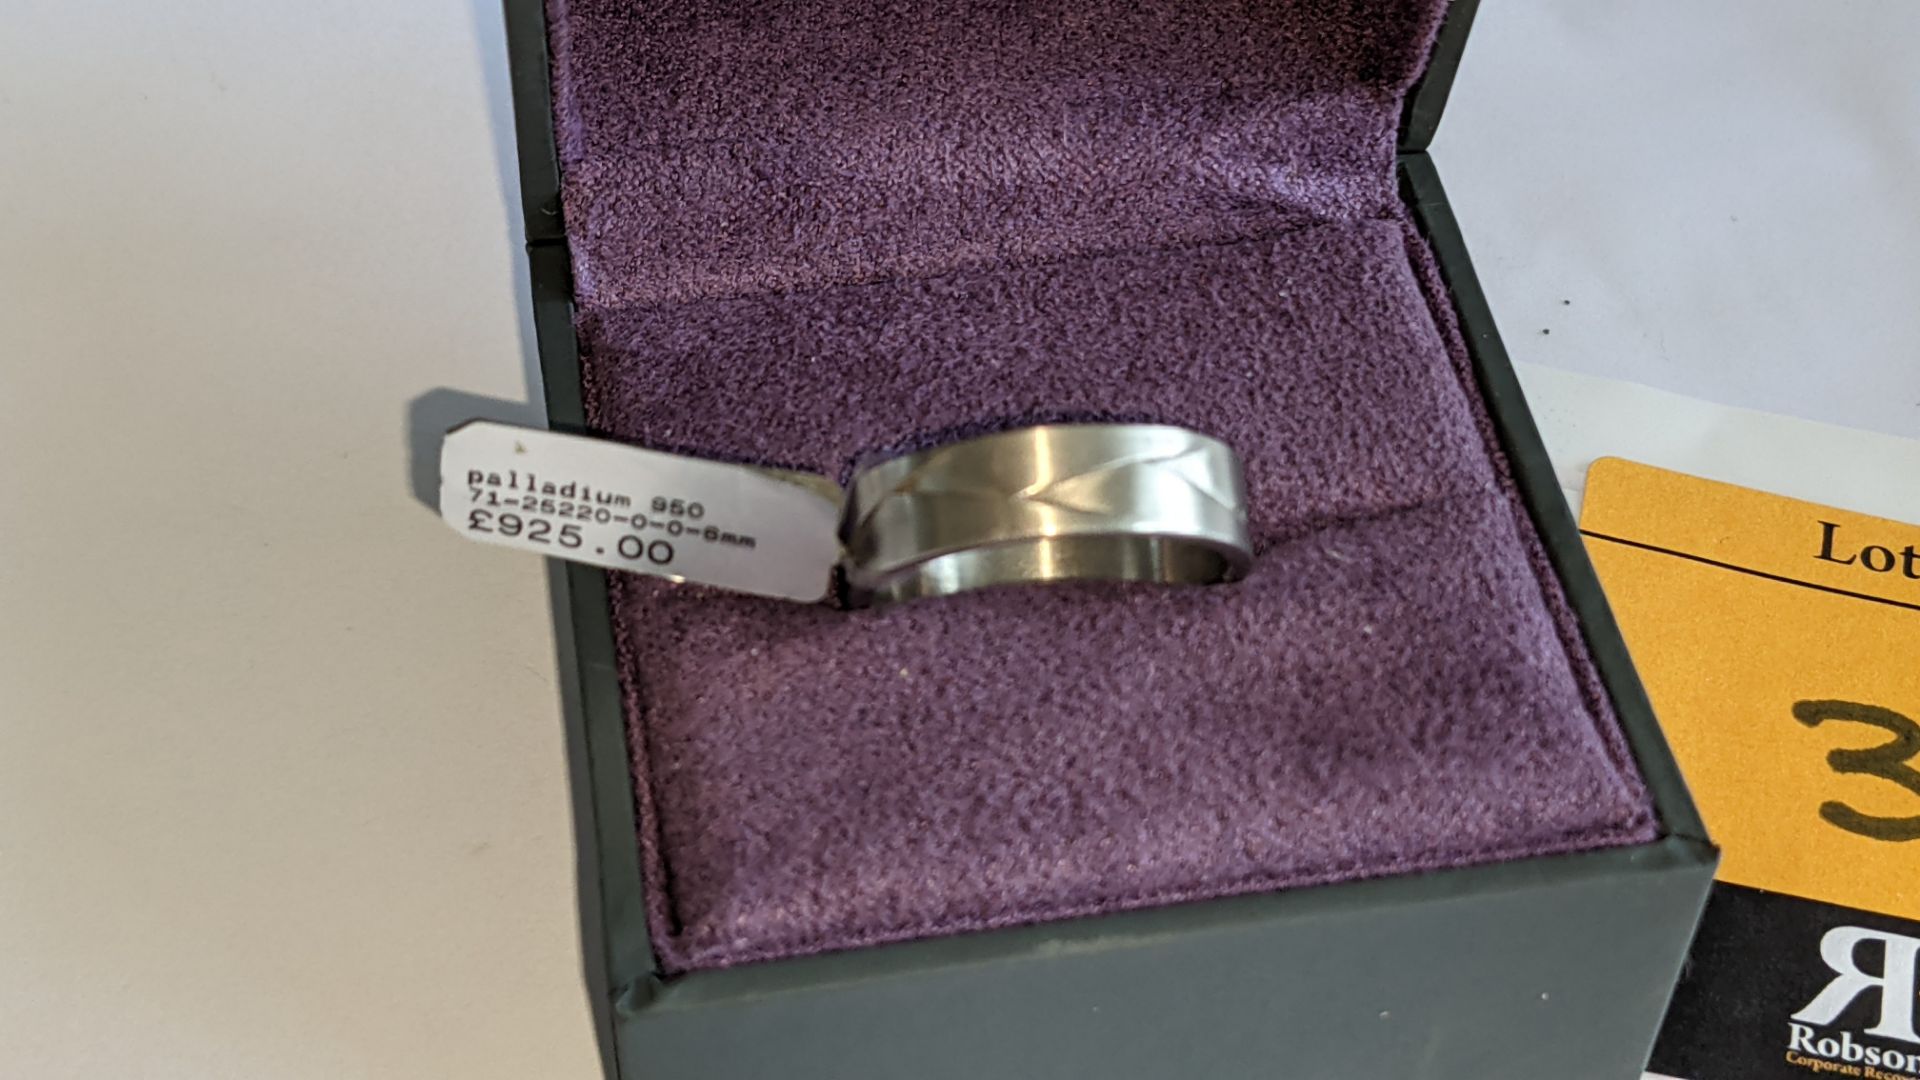 Palladium 950 6mm woven ring. RRP £925 - Image 4 of 14